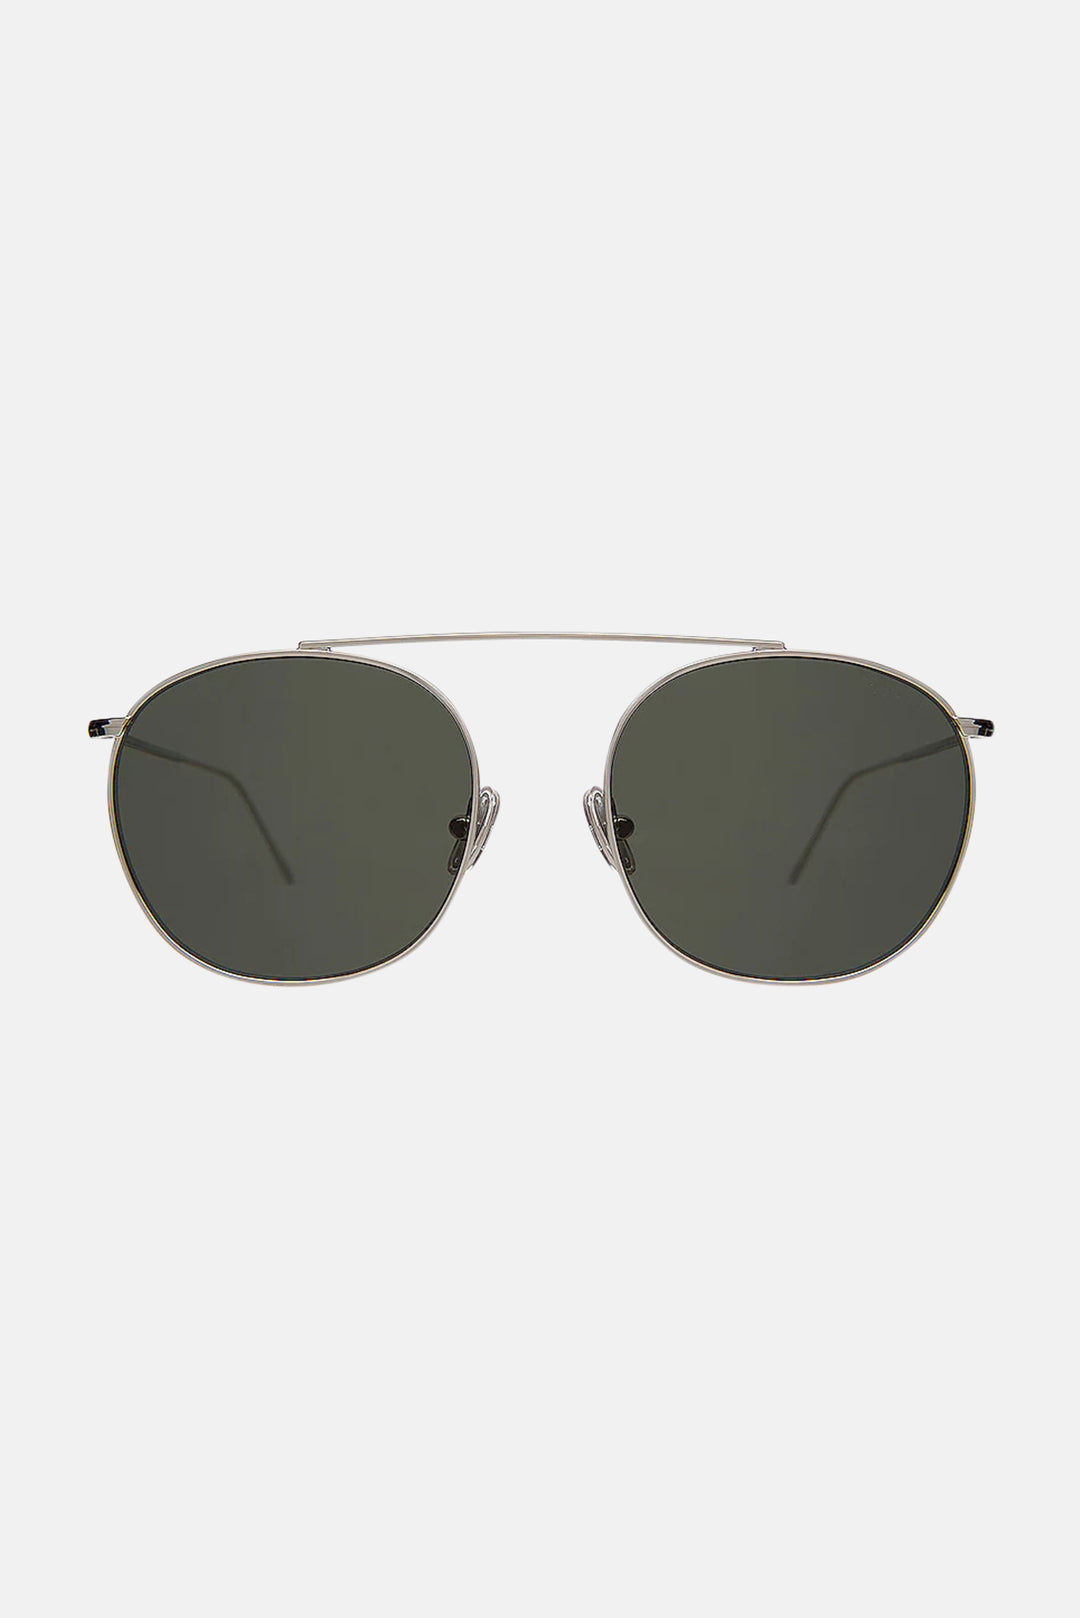 Mykonos II Sunglasses Silver/Olive - blueandcream